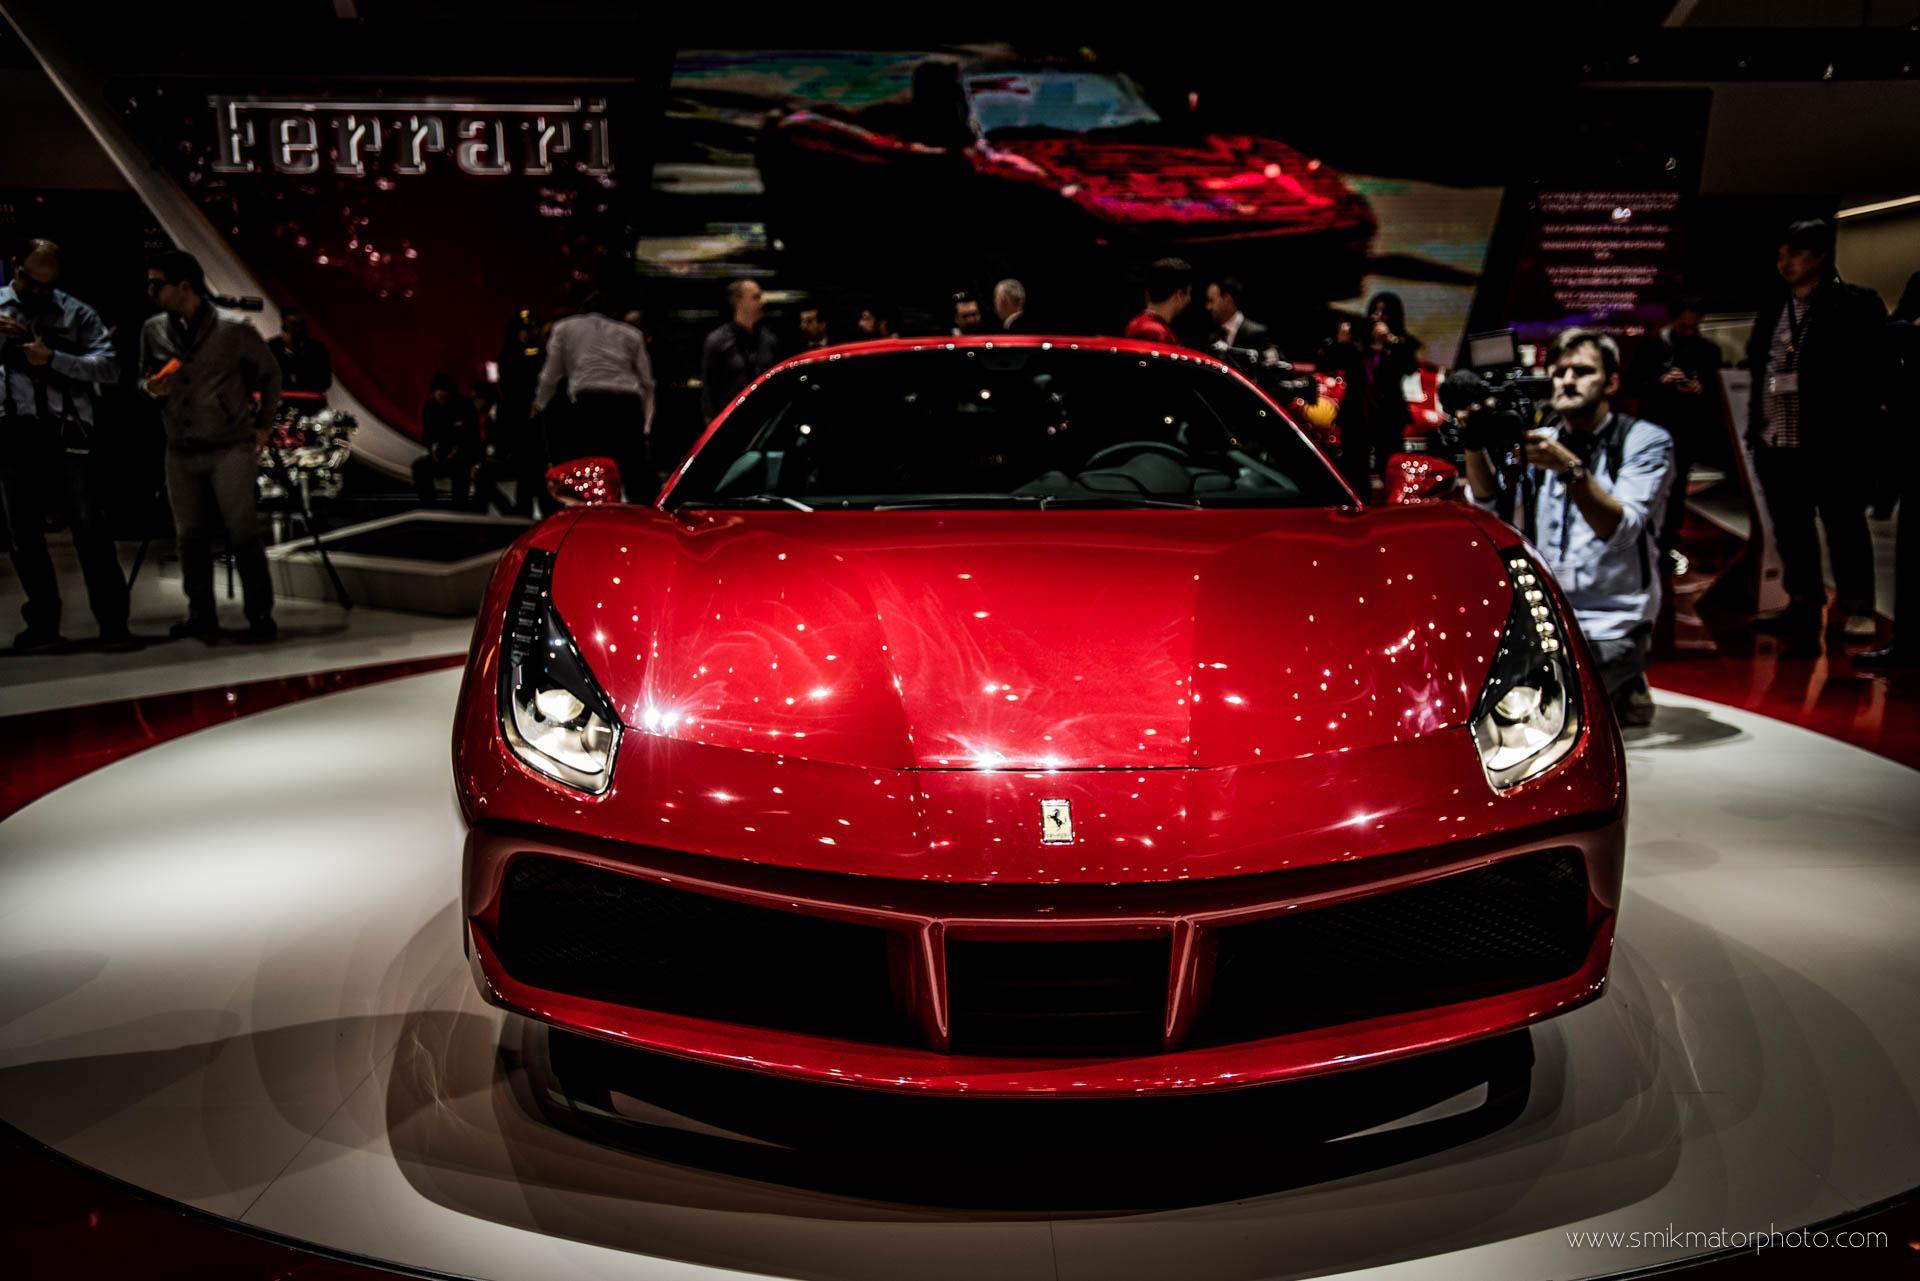 The Ferrari 488 GTB